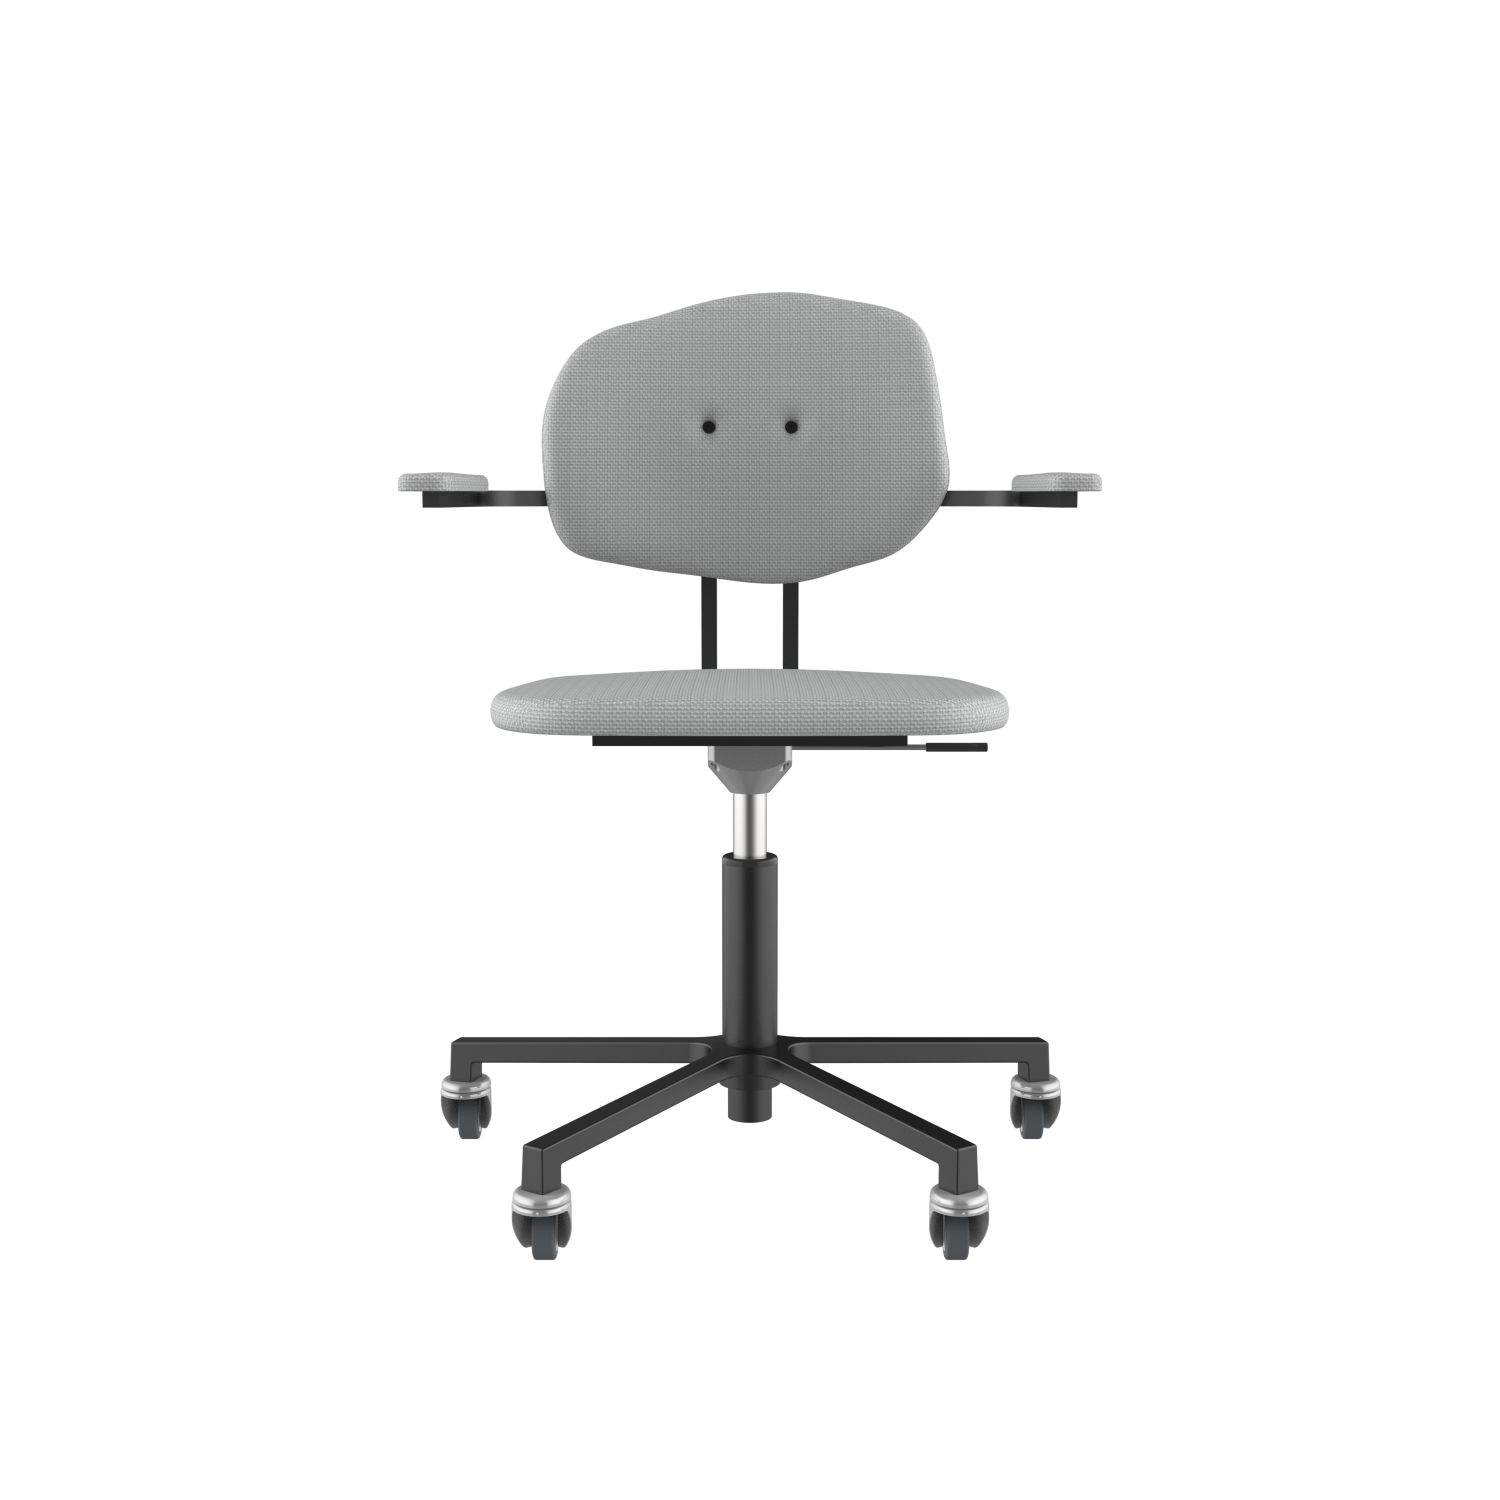 lensvelt maarten baas office chair with armrests backrest e breeze light grey 171 black ral9005 soft wheels